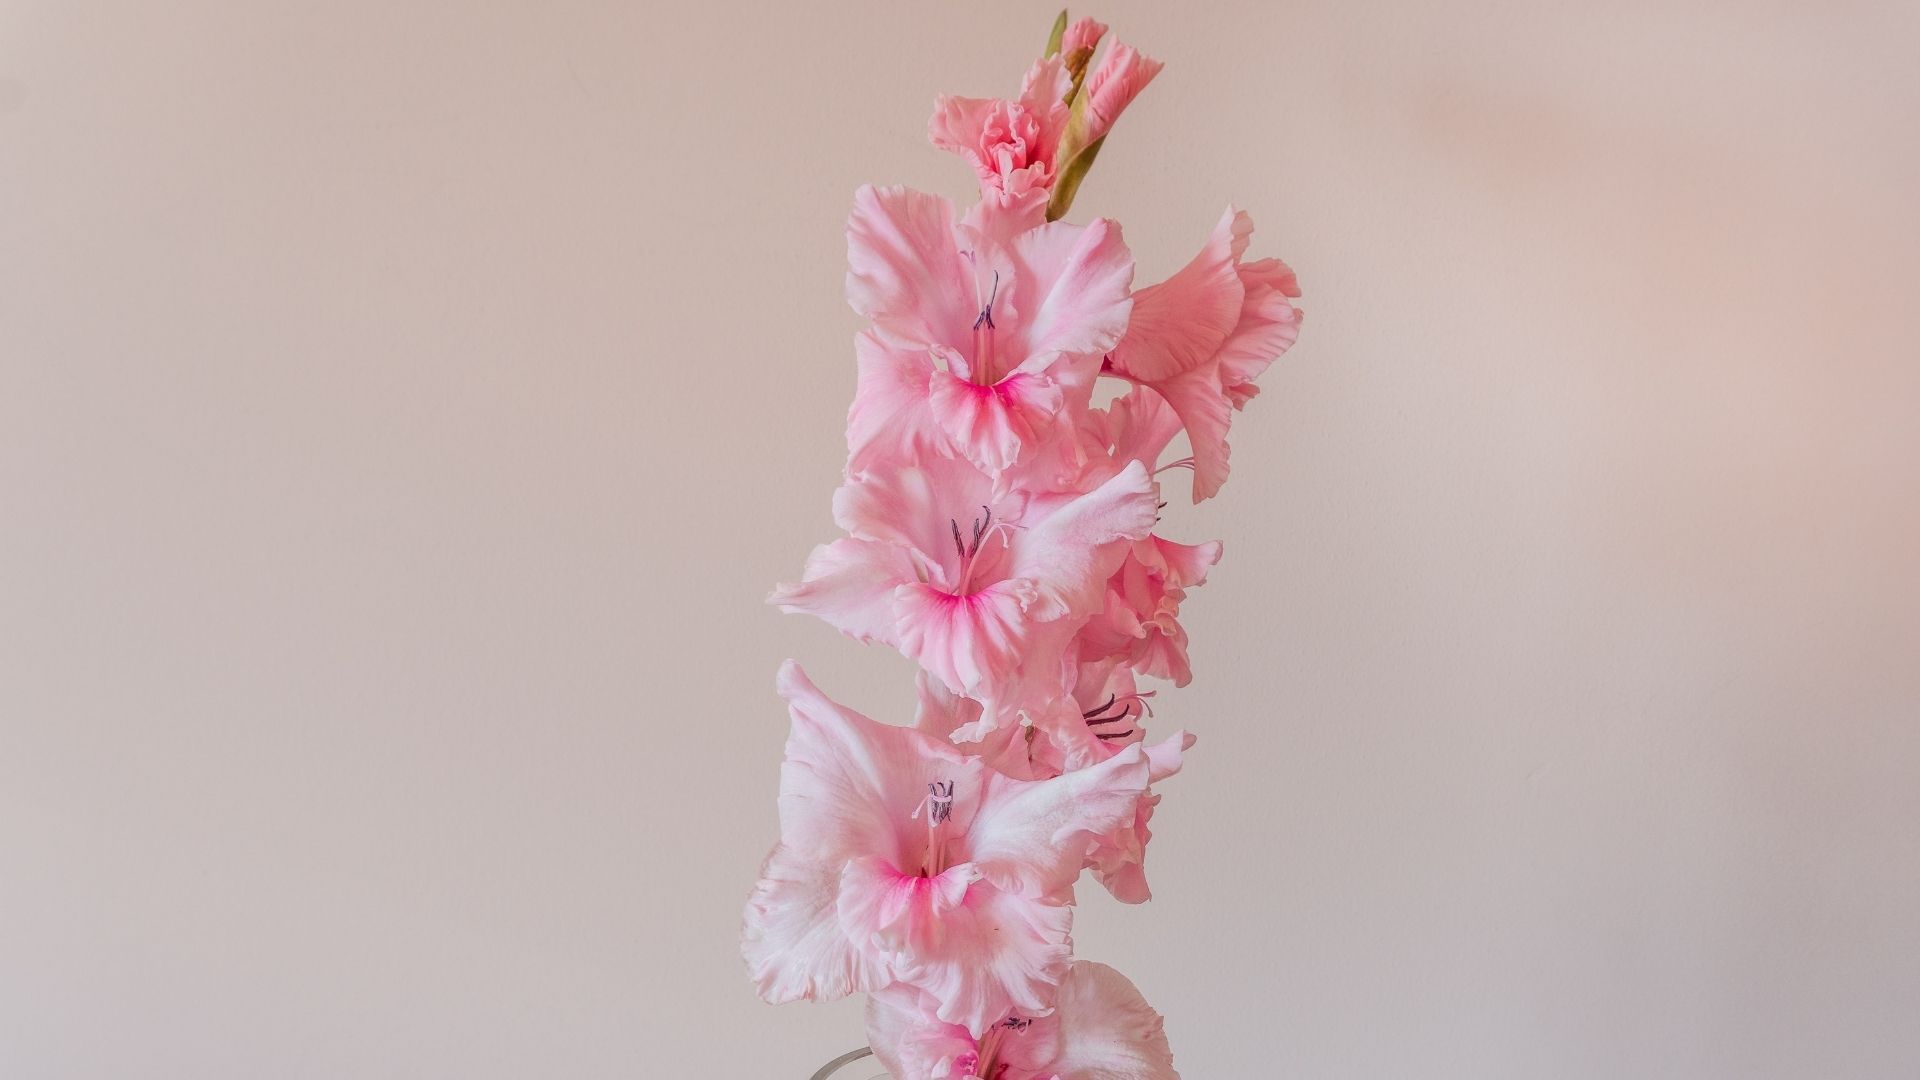 Most beautiful flowers: Gladiolus